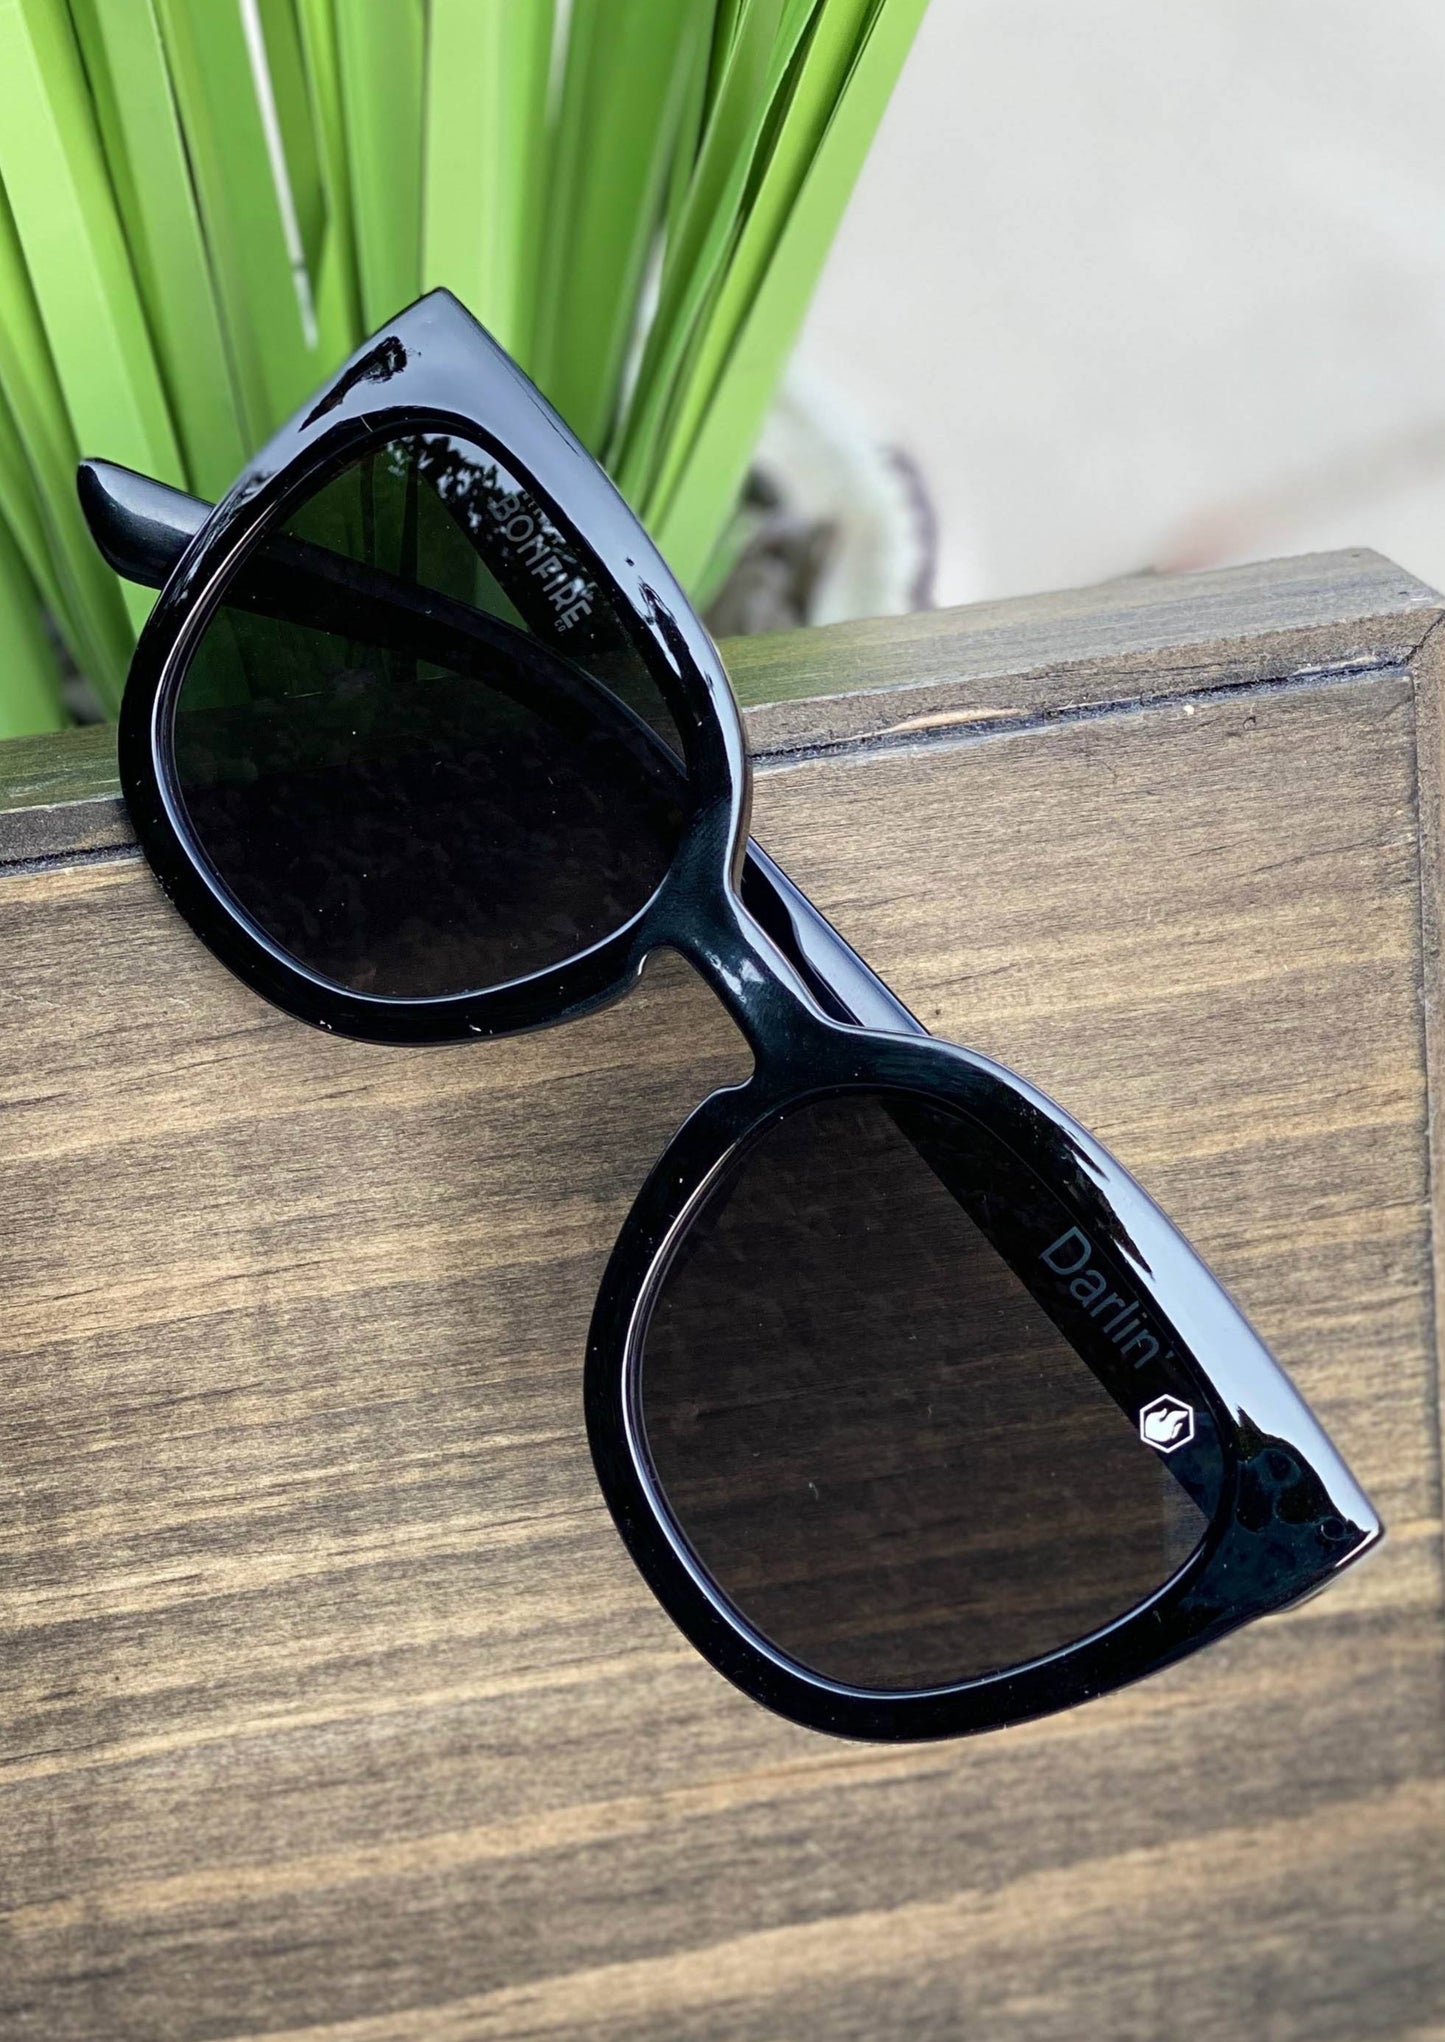 Darlin' Sunglasses in Black - Our Little Secret Boutique